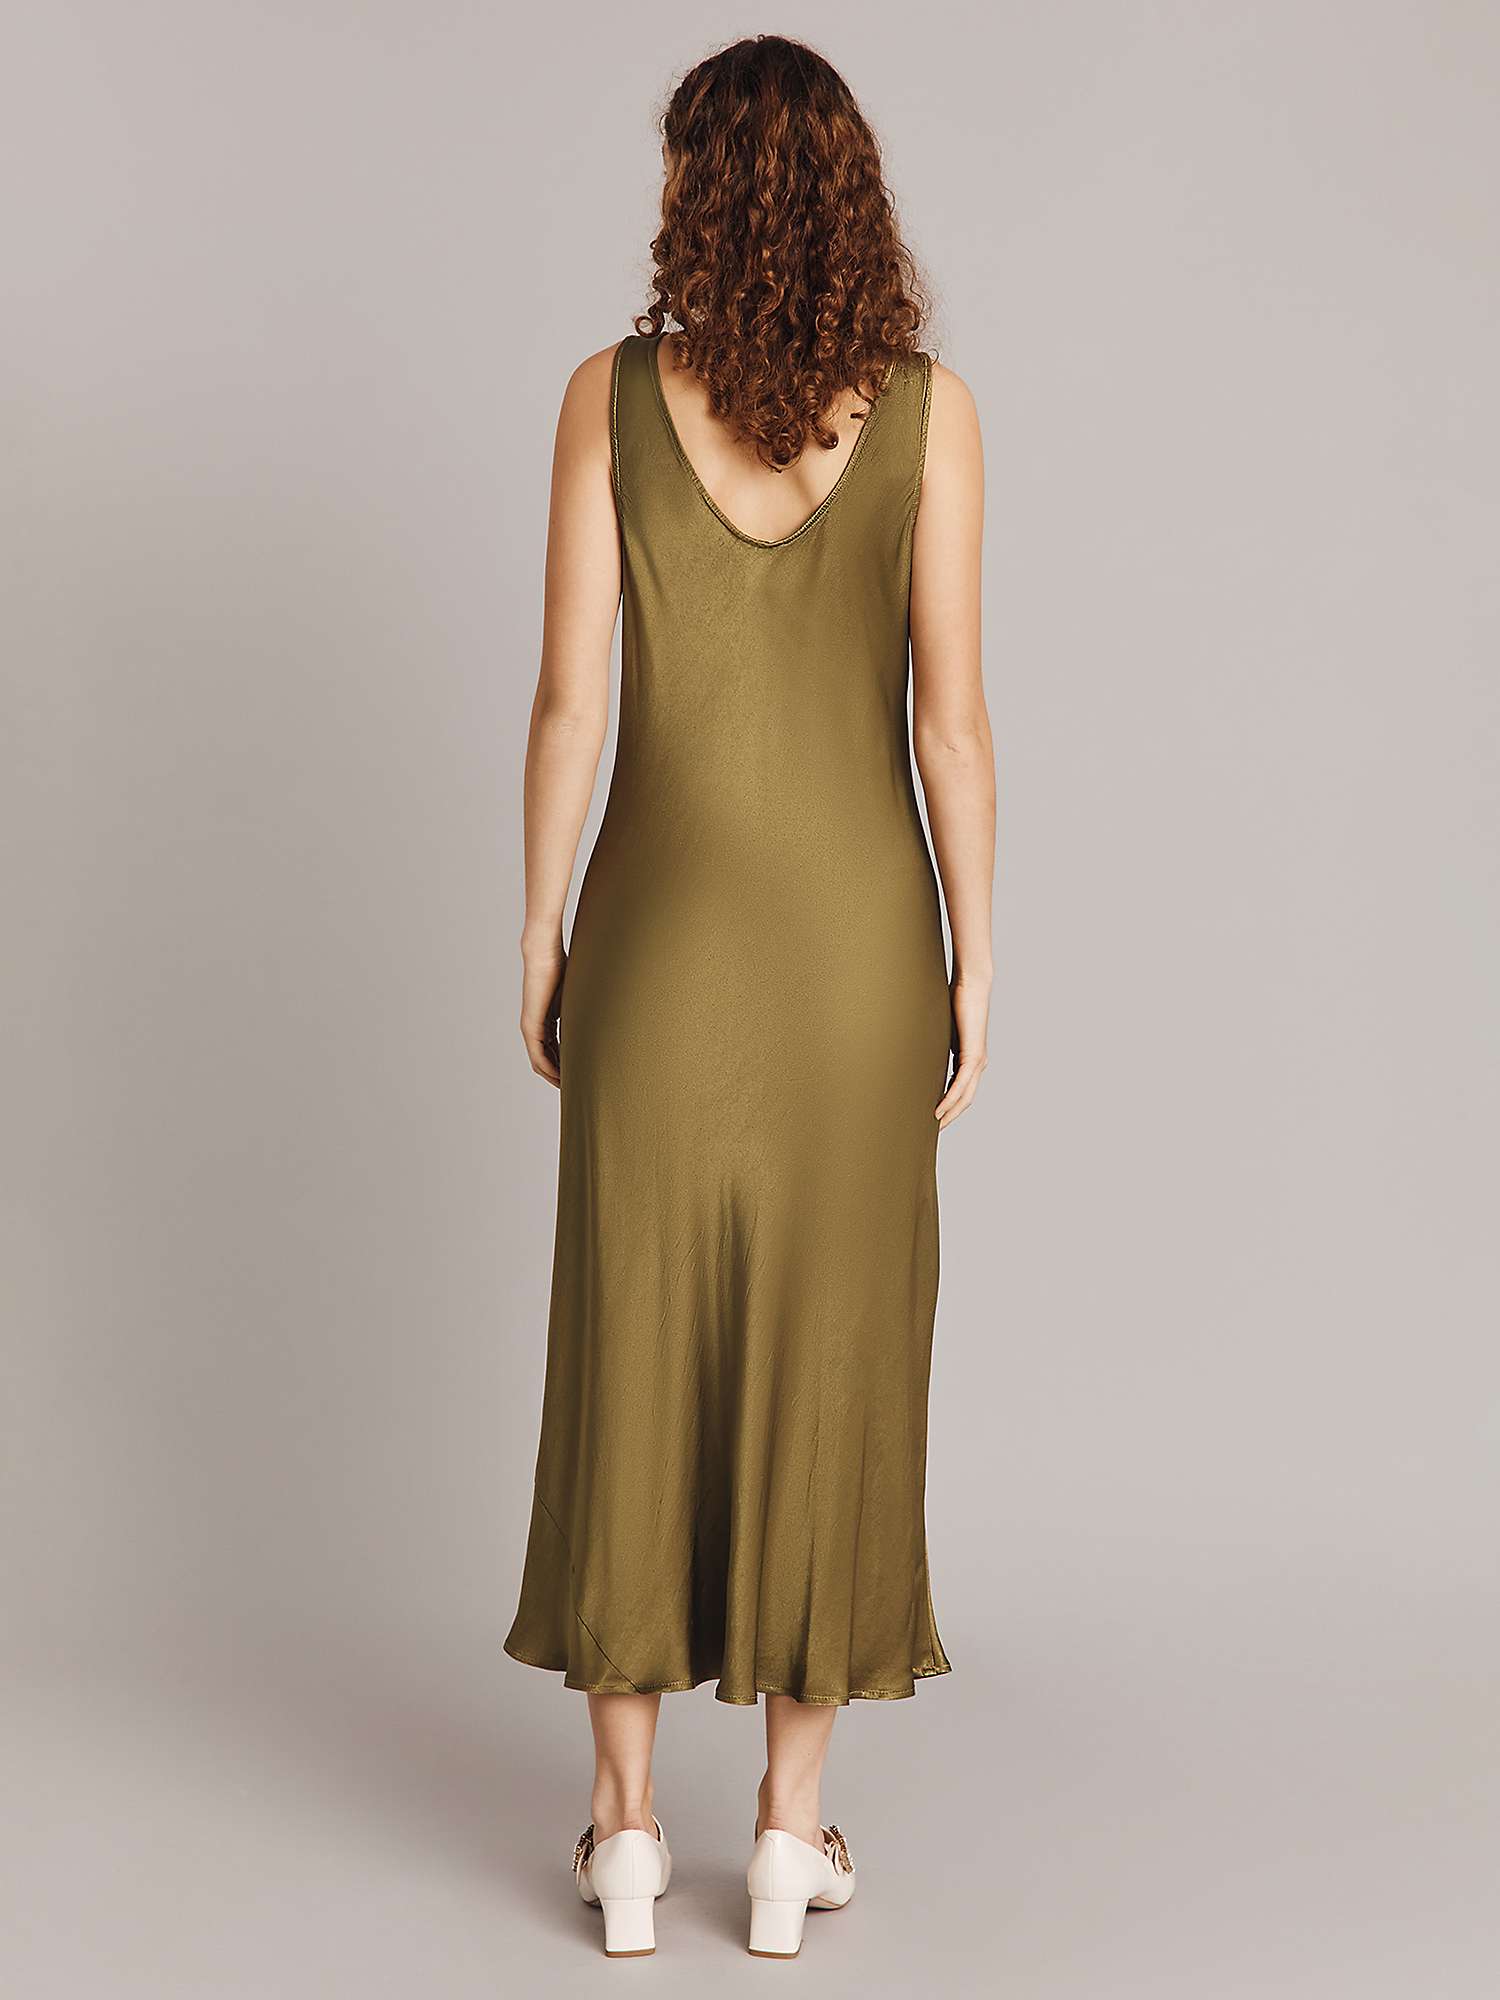 Buy Ghost Palm Bias Cut Satin Slip Dress Online at johnlewis.com